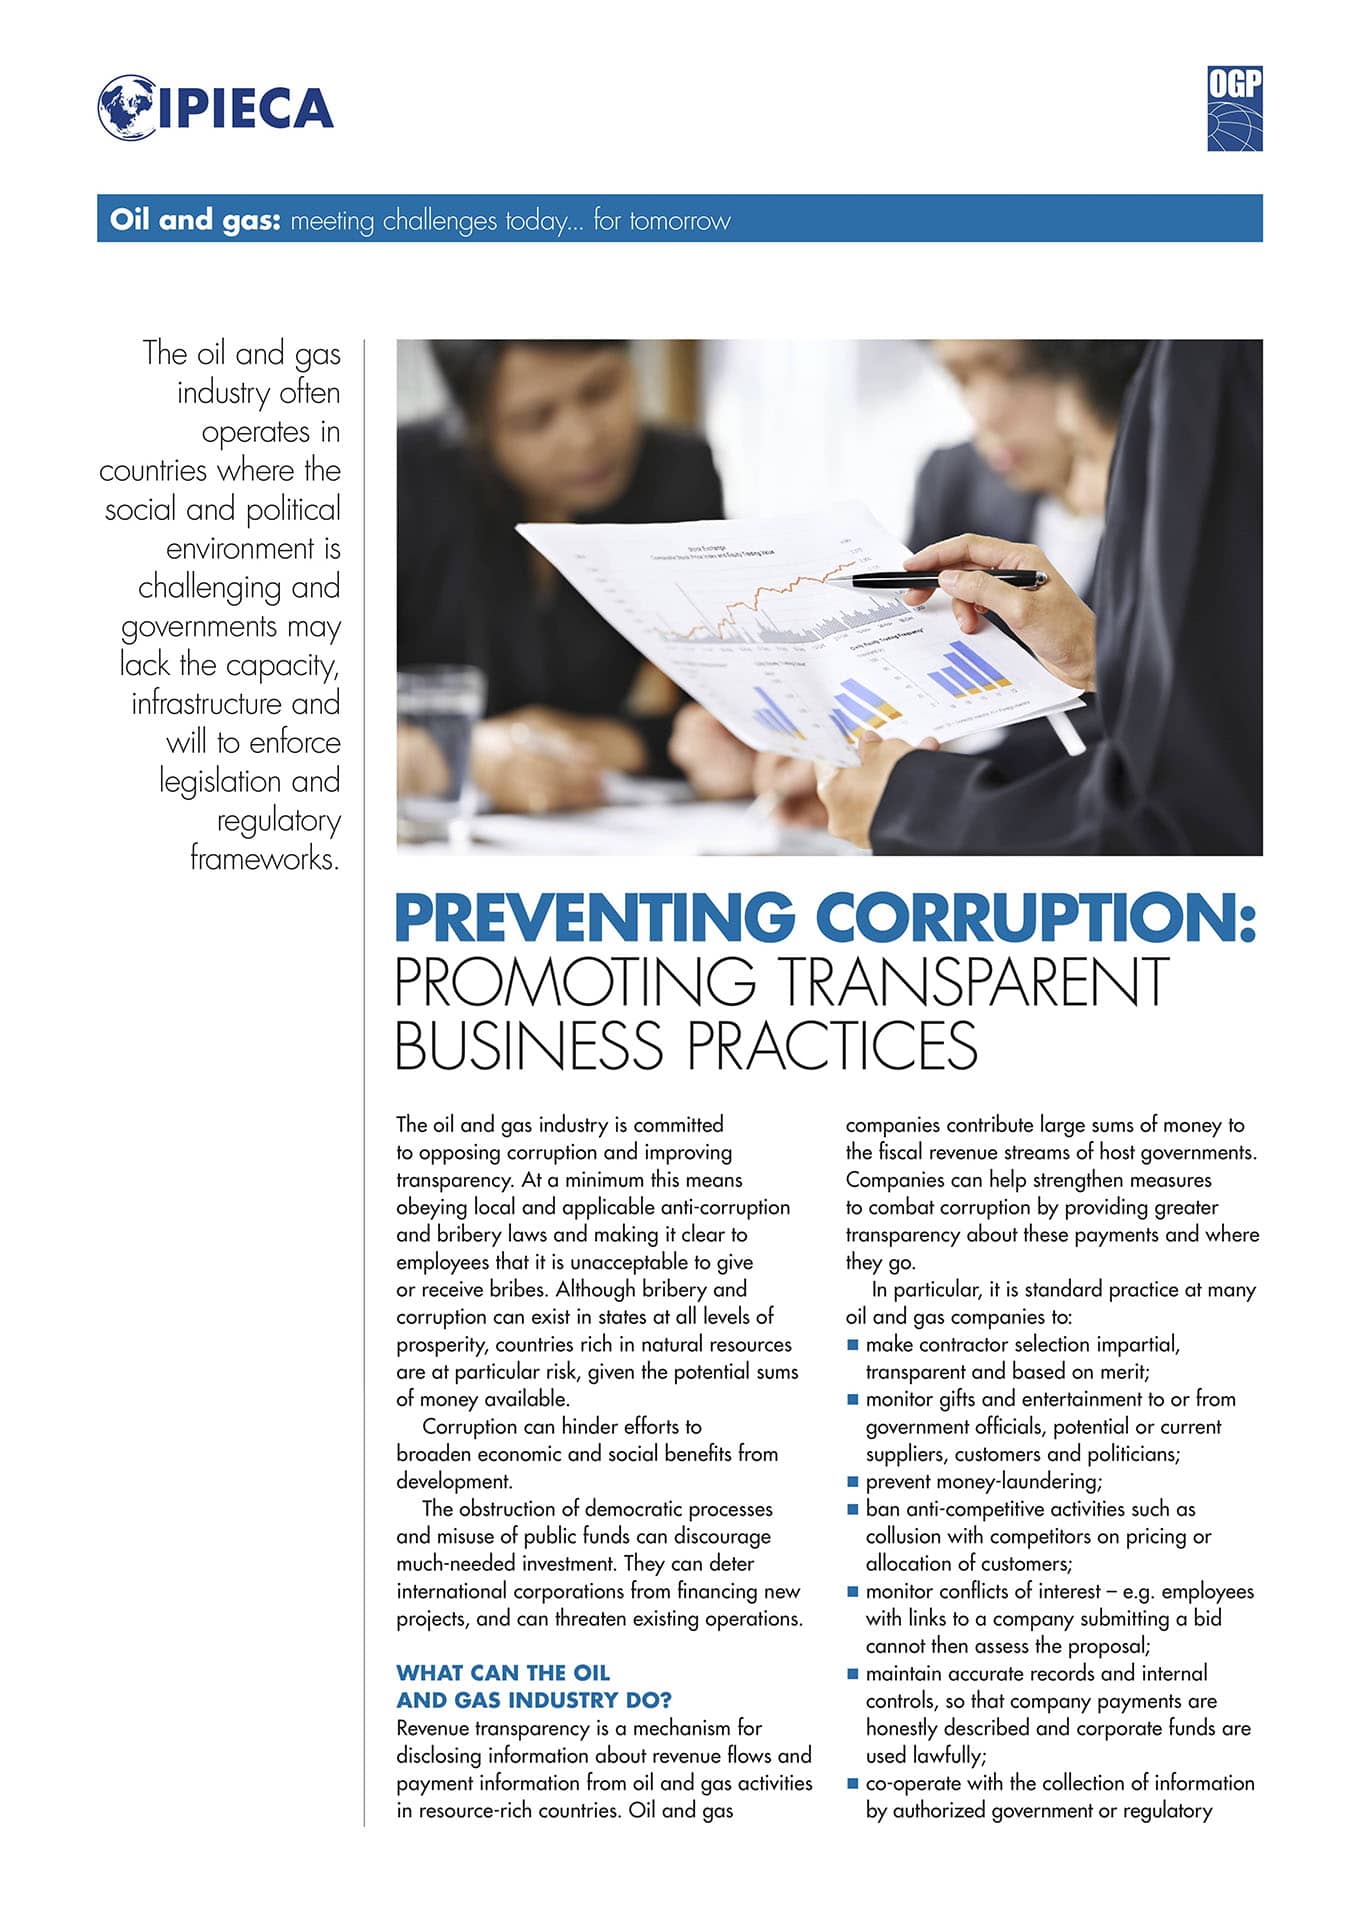 Preventing Corruption: Promoting Transparent Business Practices (IPIECA and OGP, 2012)